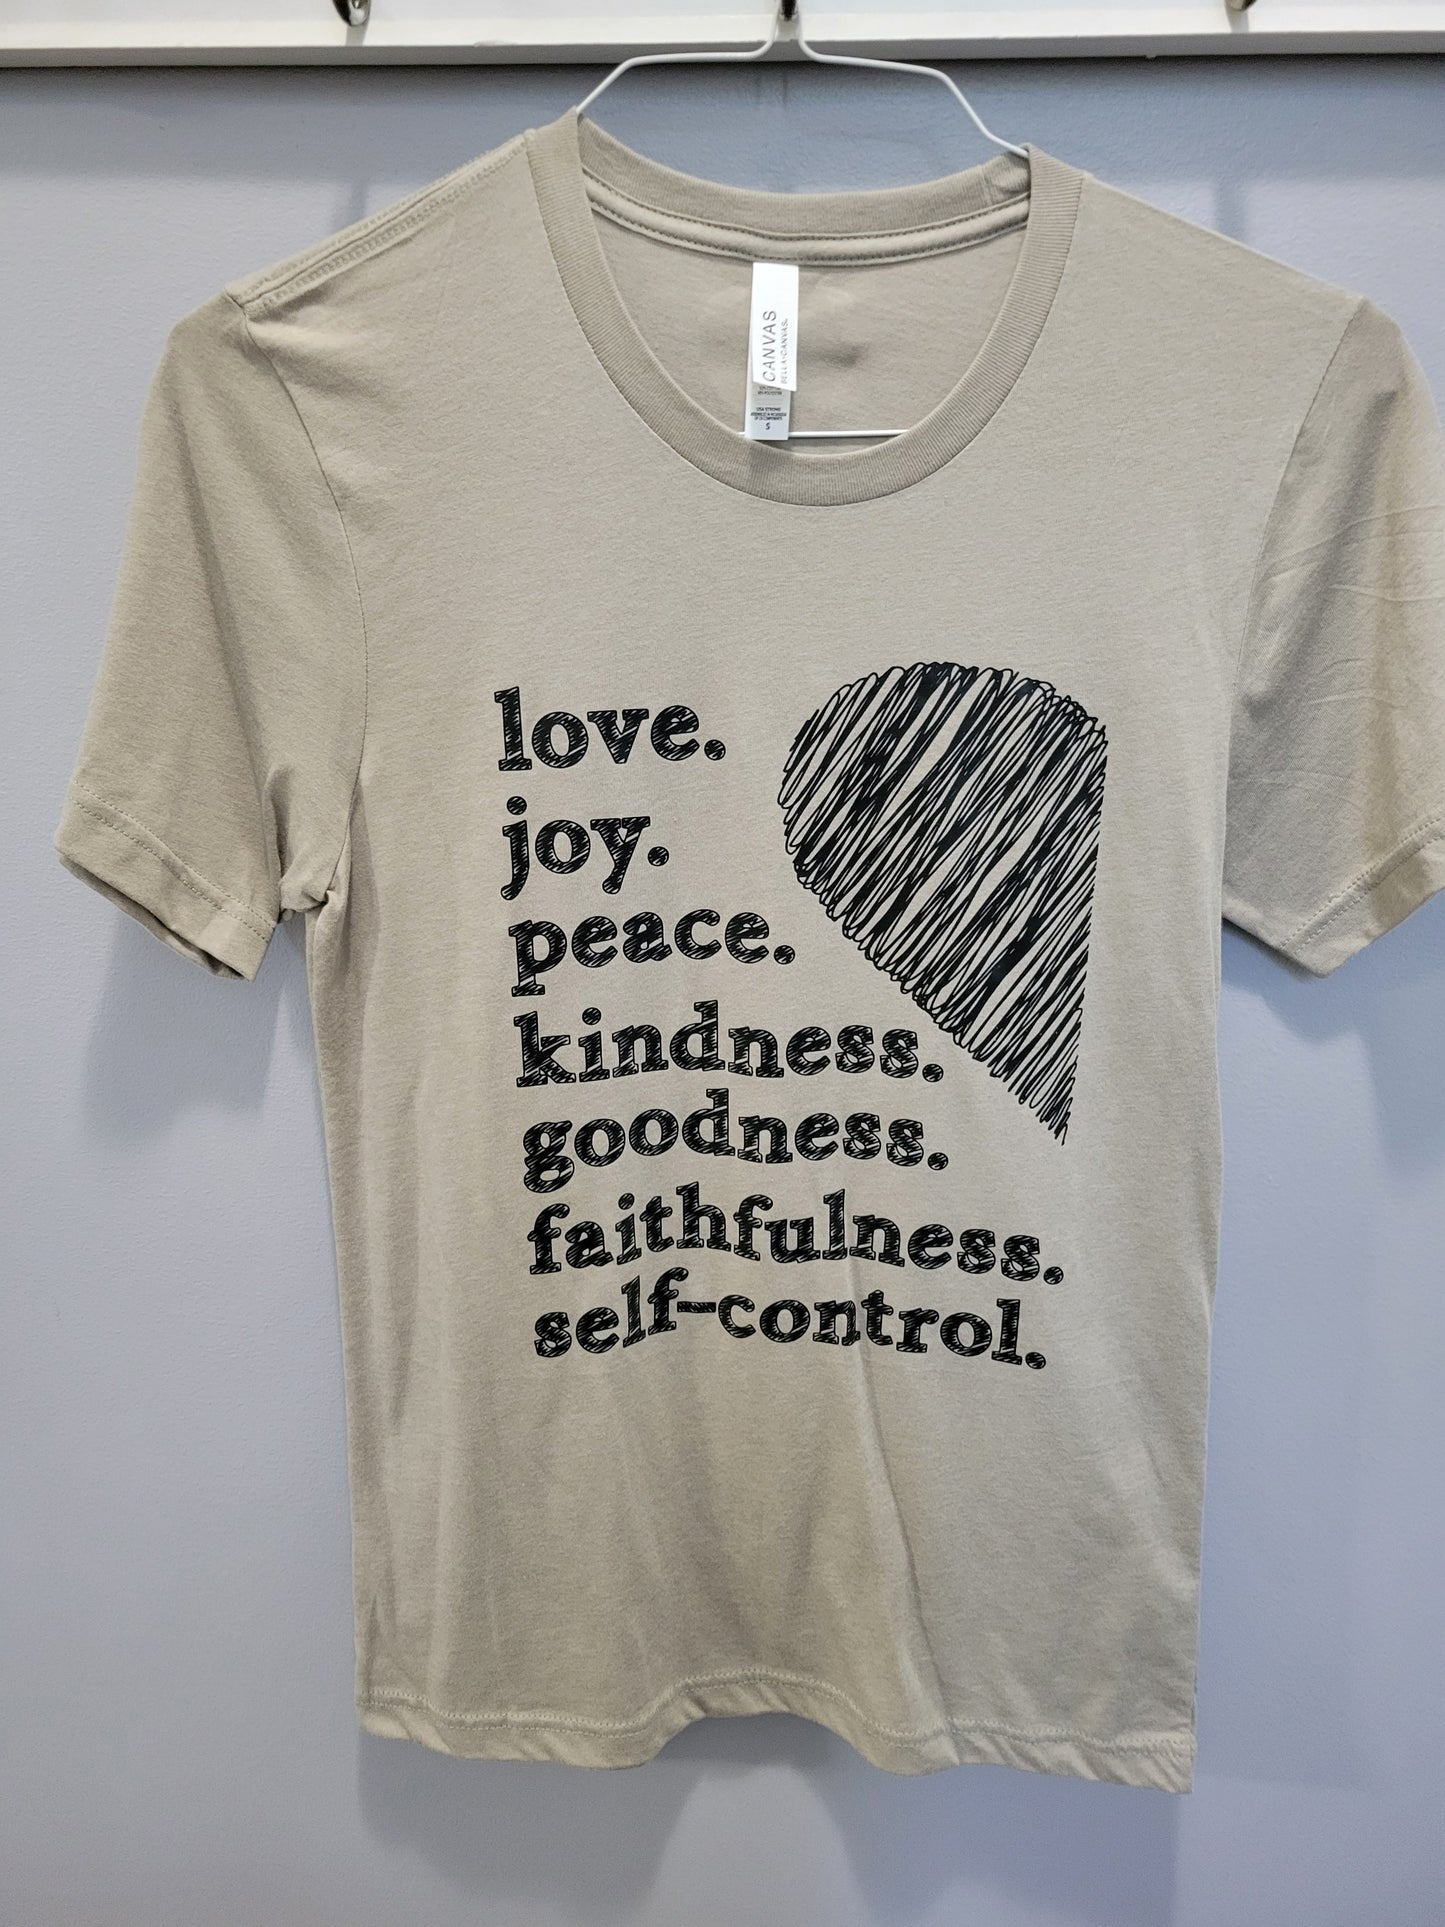 Love. Joy. Peace. Kindness. Goodness. Faithfulness. Self-Control.